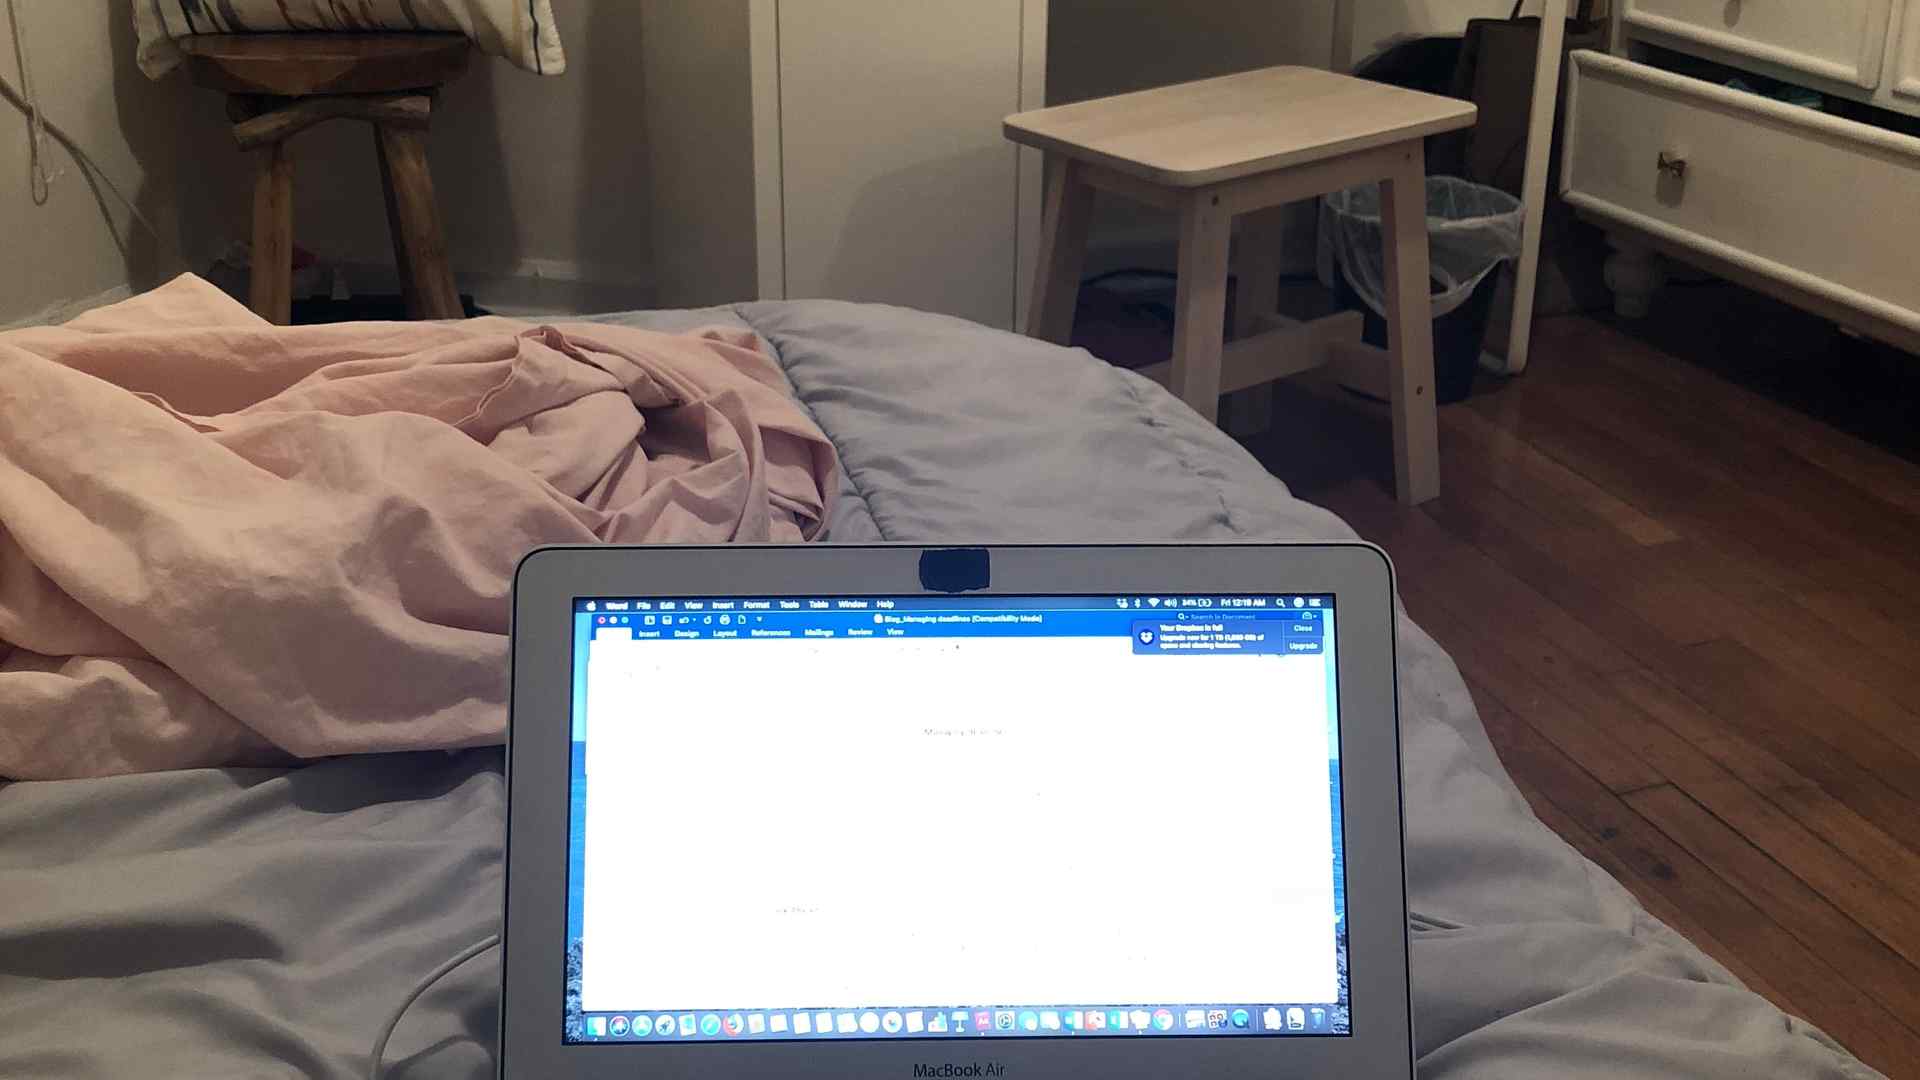 Regina's laptop on her bed